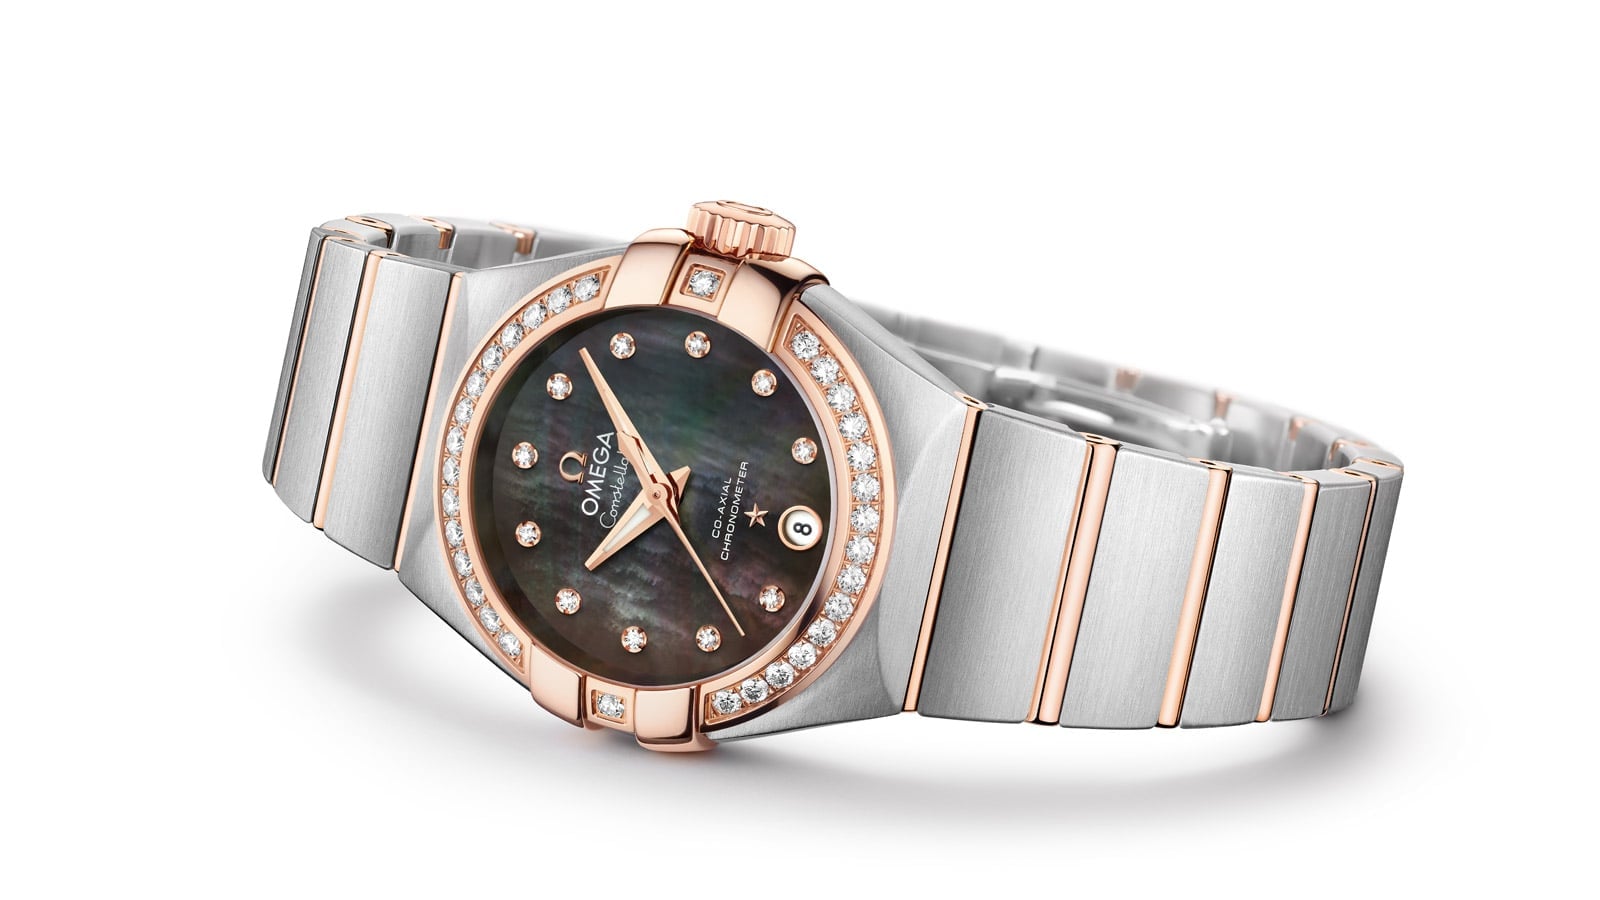 Dhgate Fake Rolex Watch